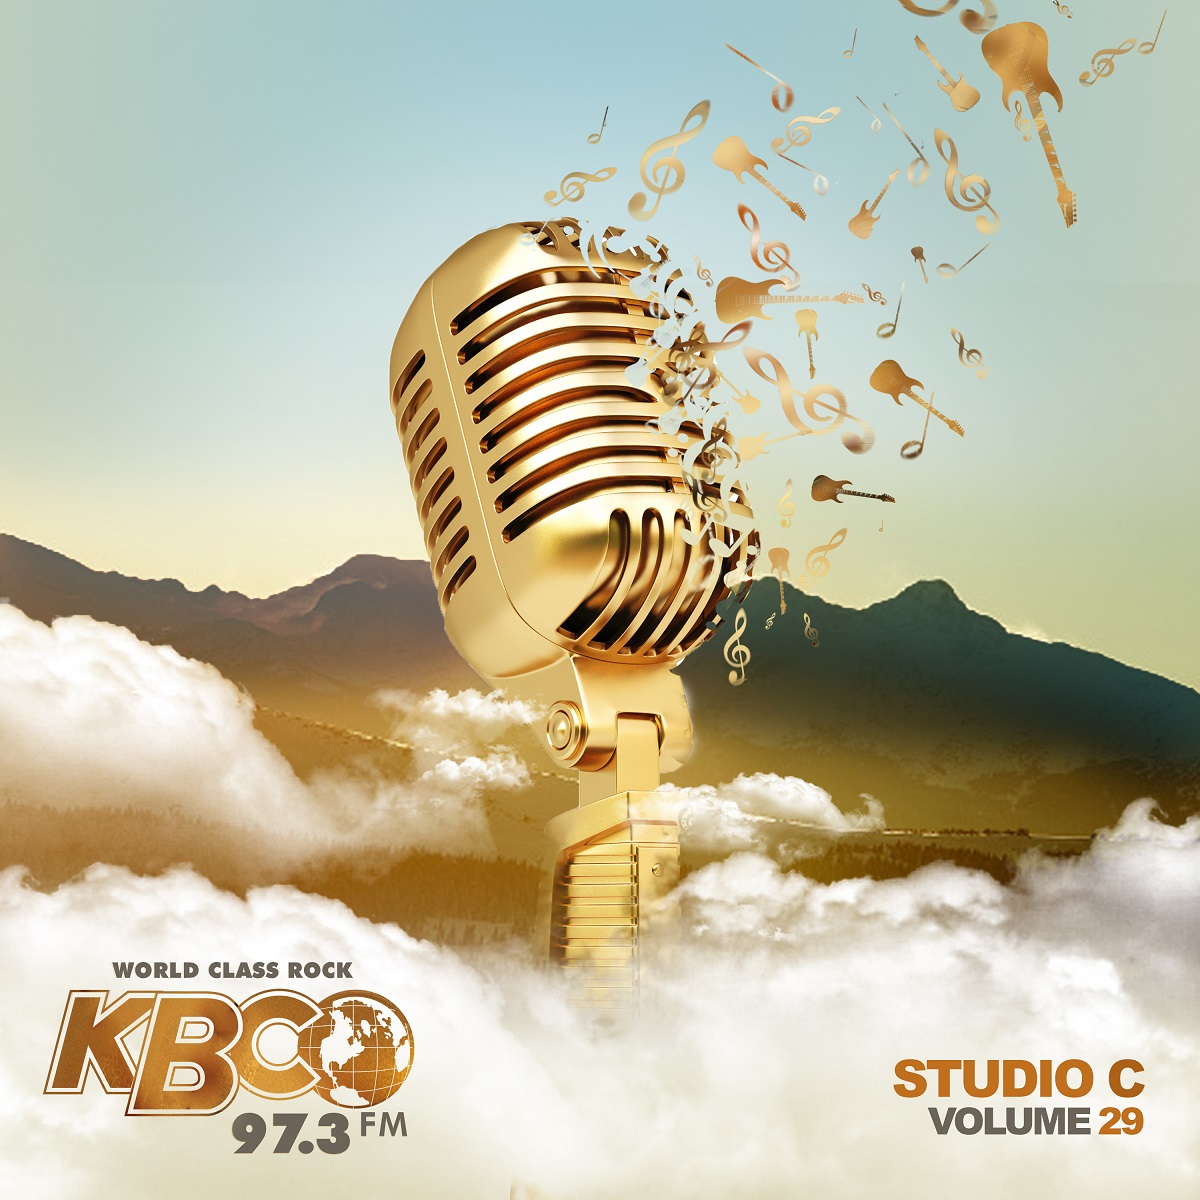 KBCO Set to Release Studio C Vol 29